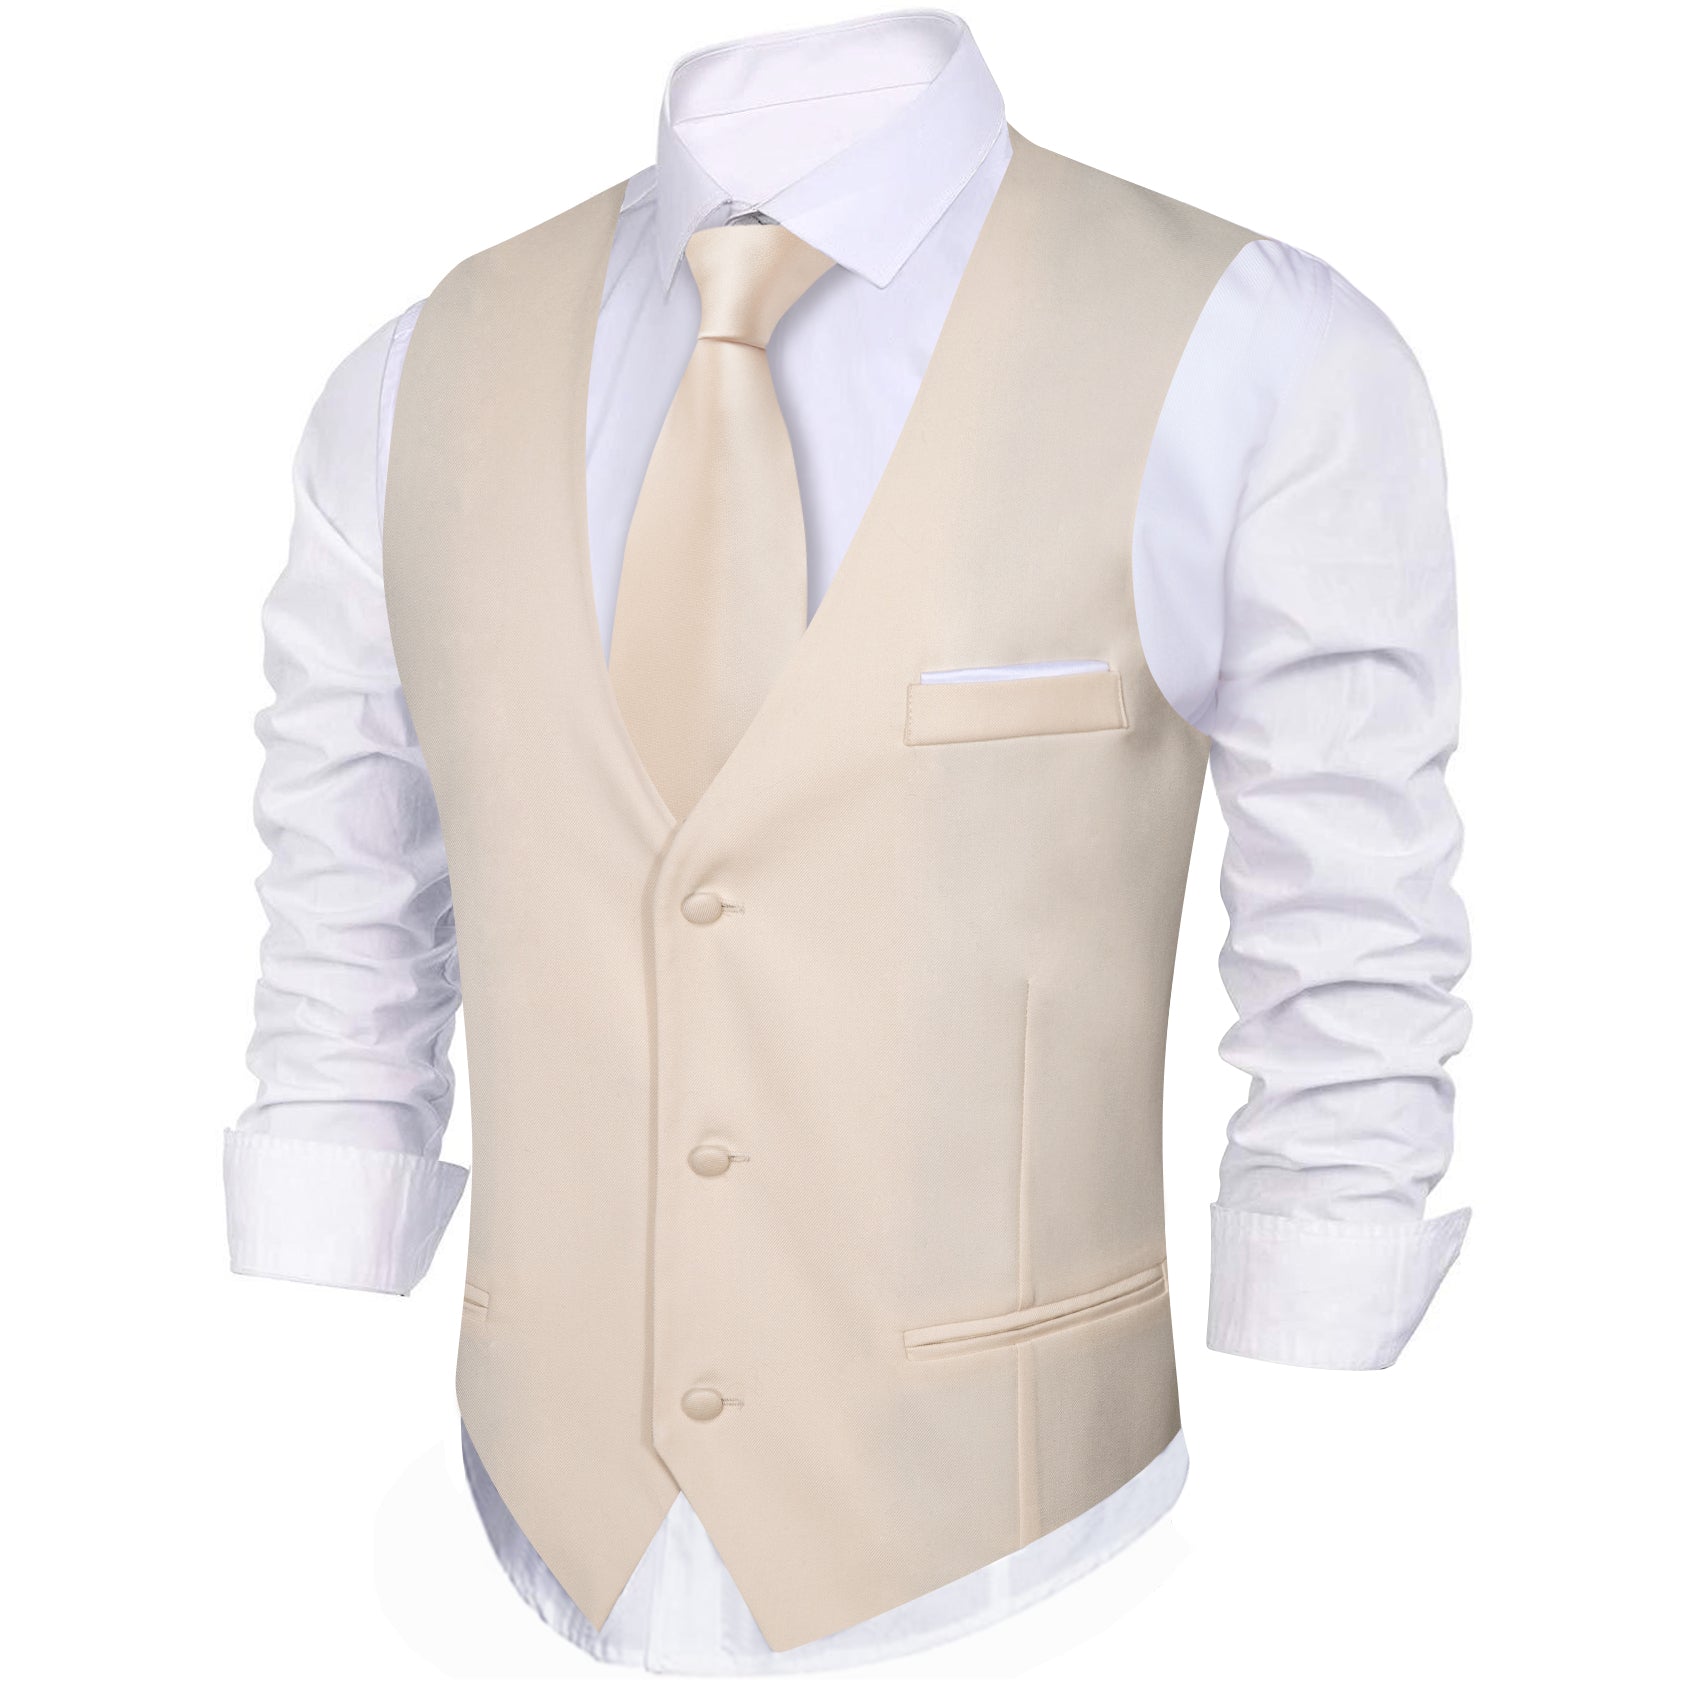 New Cornsilk Solid V-Neck Waistcoat Vest for Business